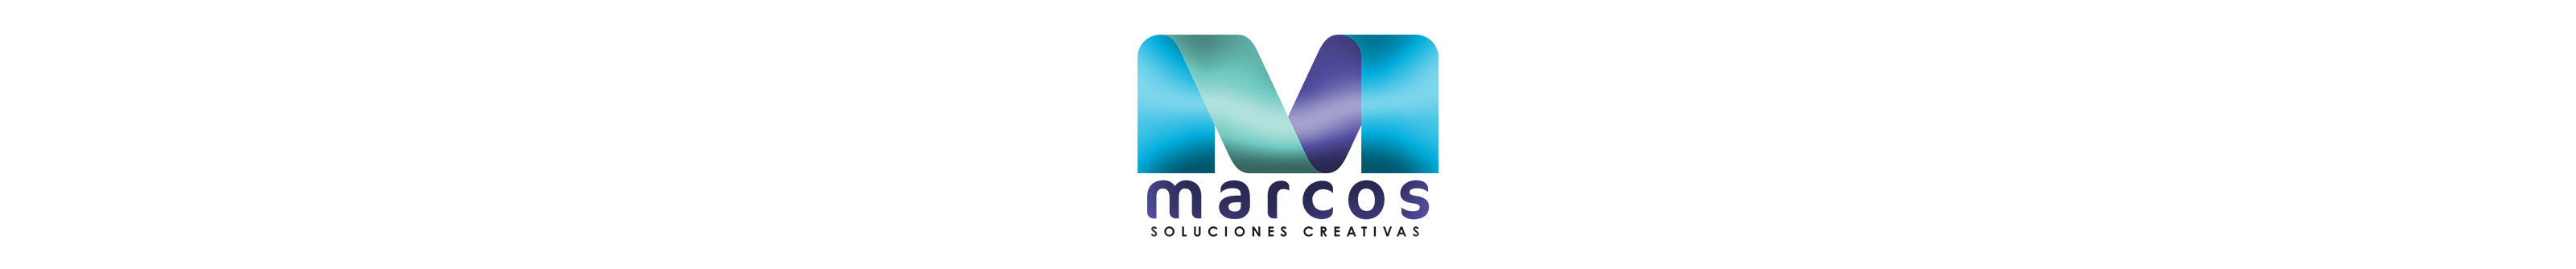 Marcos Santiago's profile banner